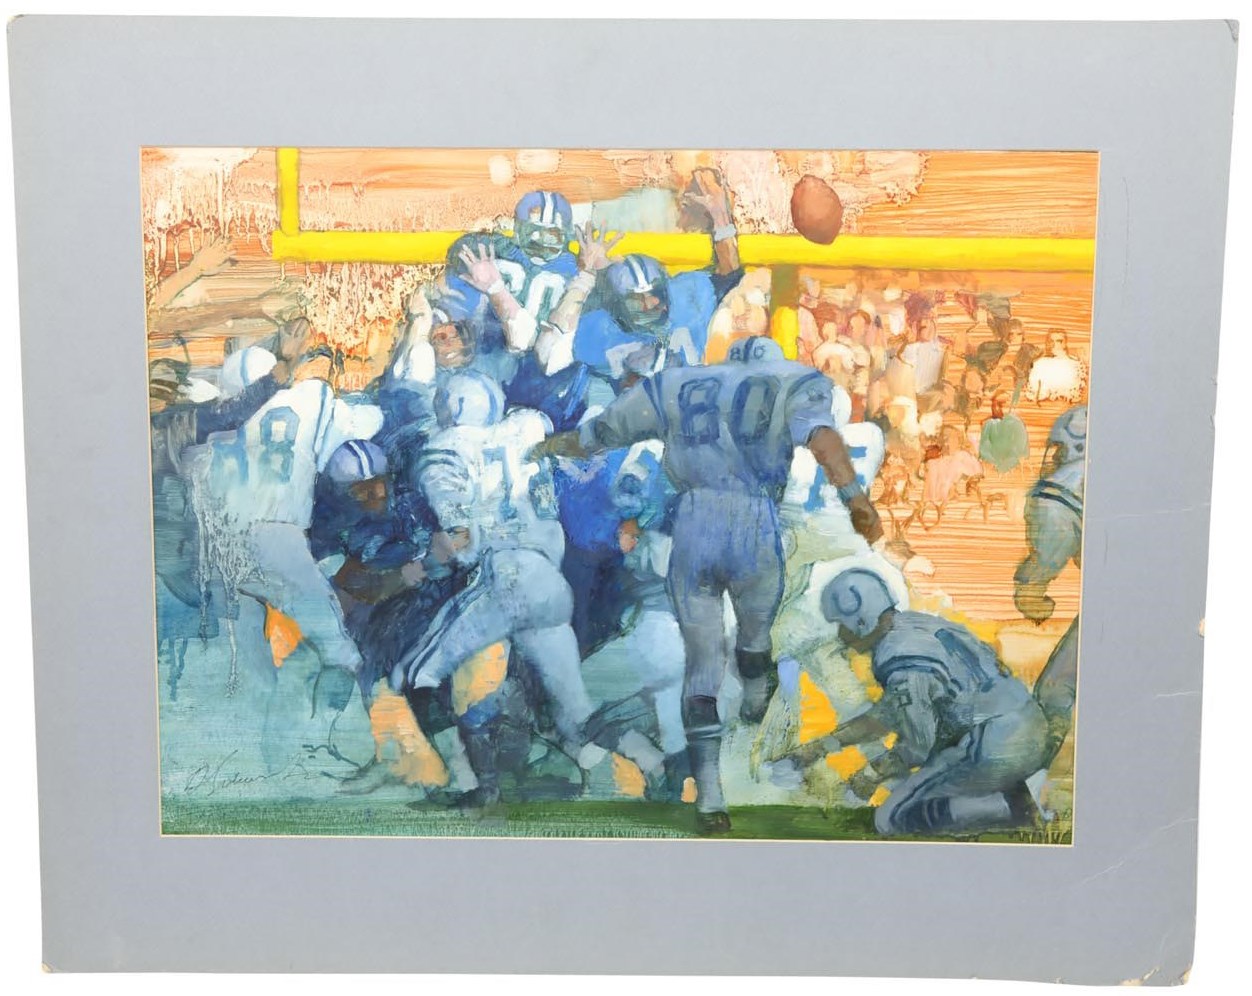 1971 Super Bowl V "Field Goal Kick" Watercolor by Daniel Schwartz - Published in Super Bowl IX Program